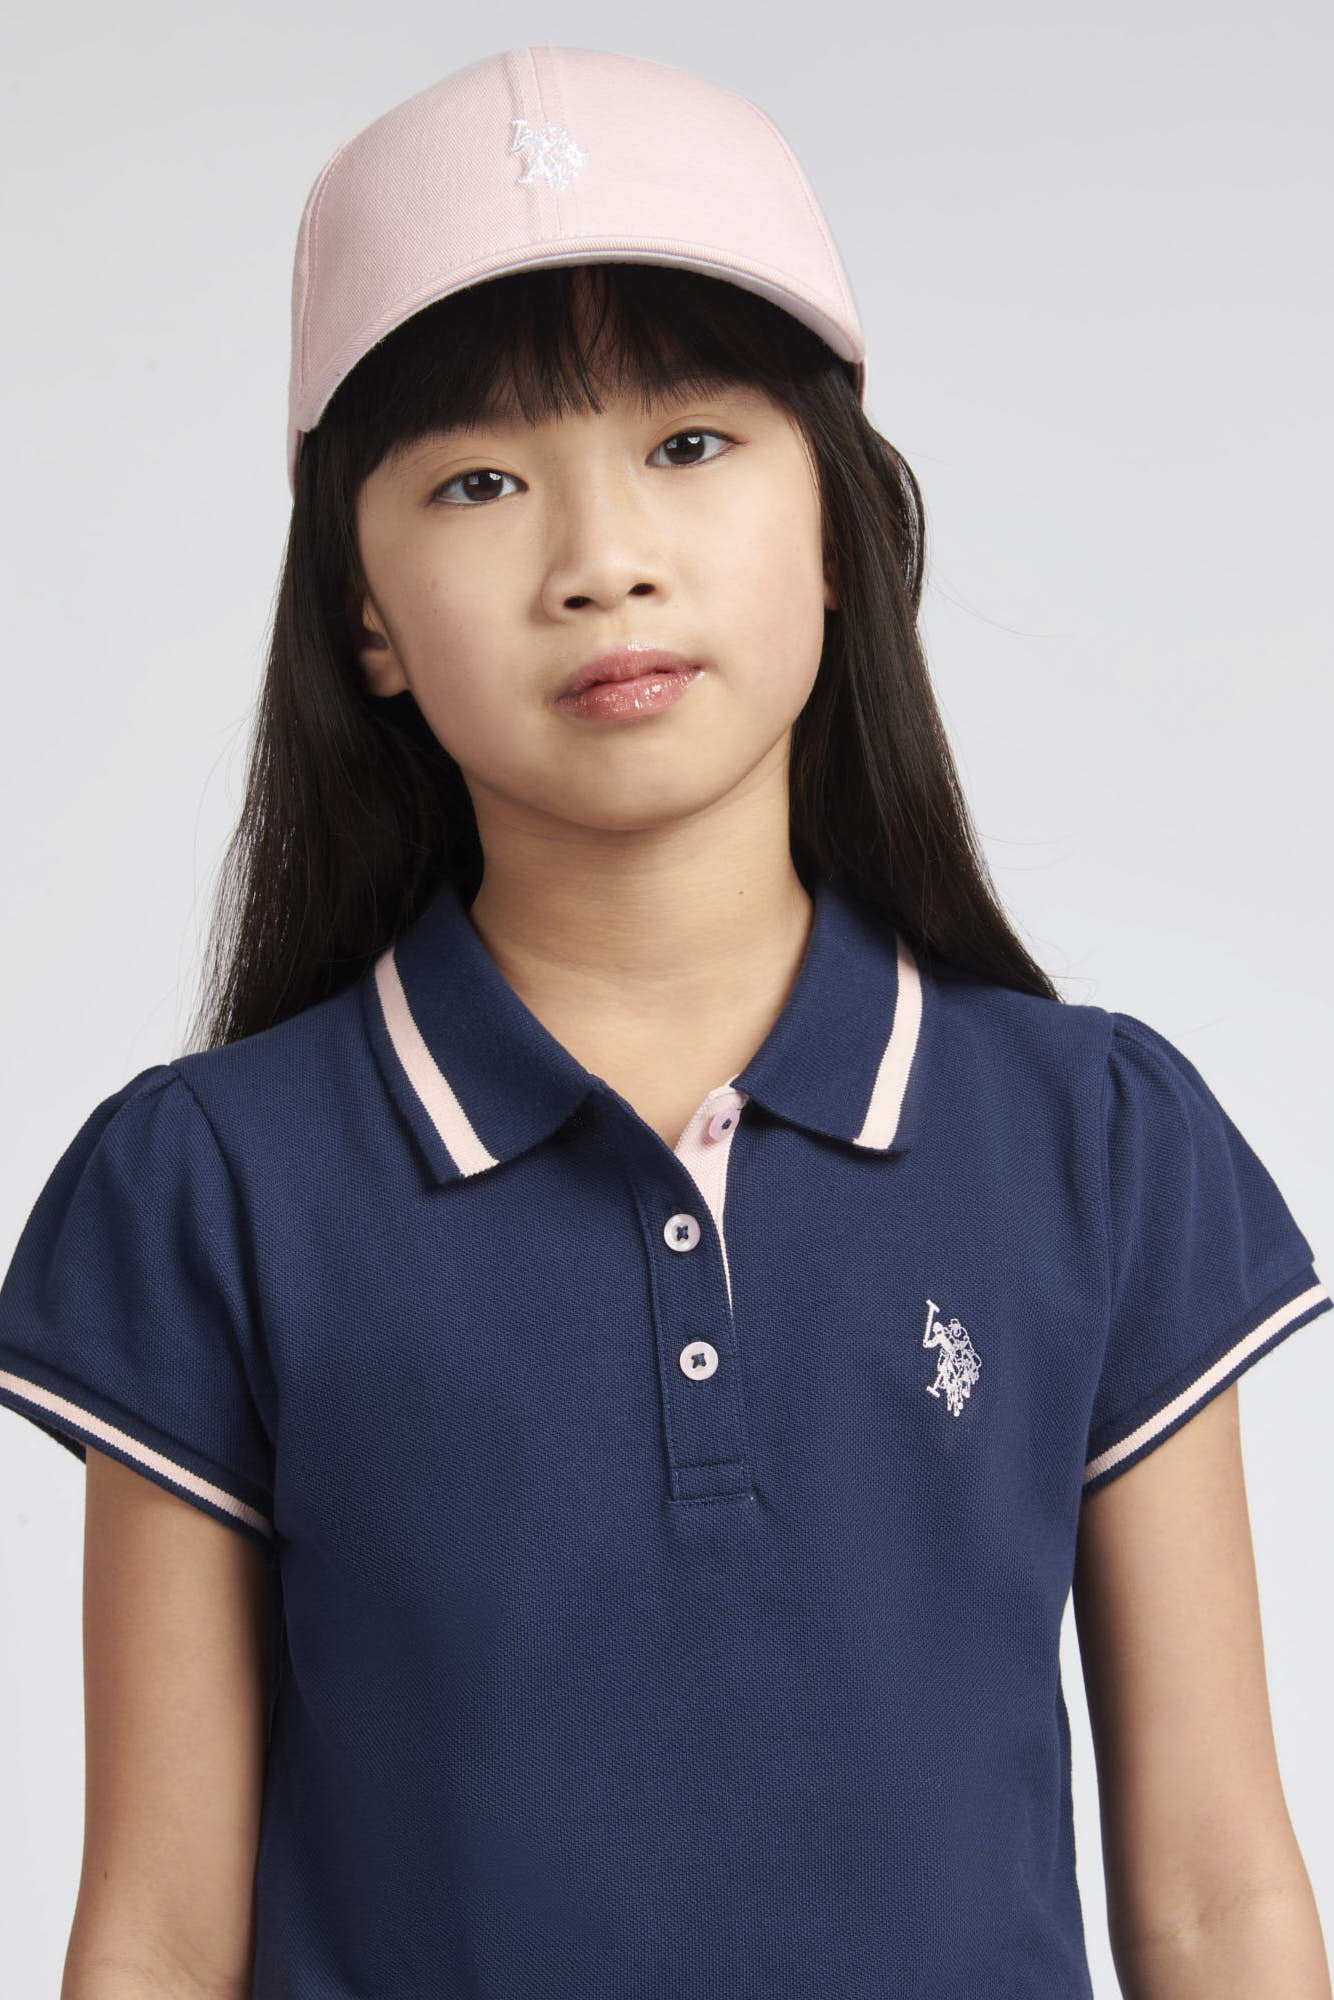 Girls Cap Sleeve Polo Shirt in Navy Iris